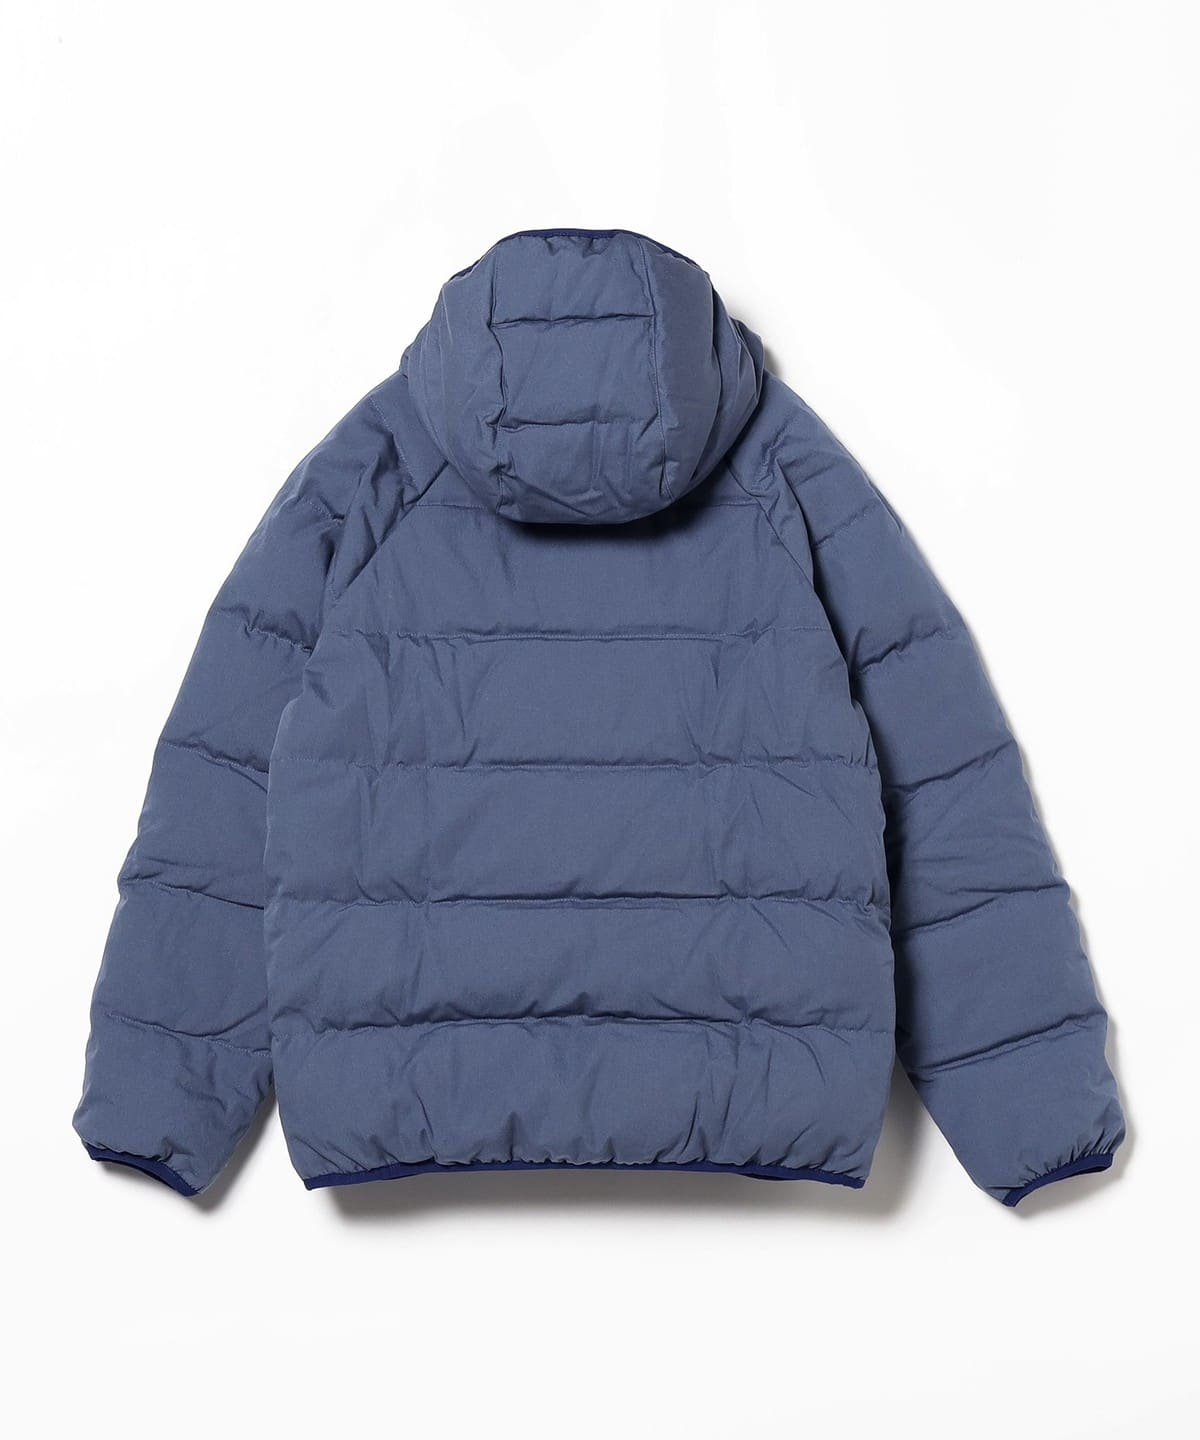 Kodomo BEAMS (Kodomo BEAMS) patagonia / Kids cotton down jacket 23 